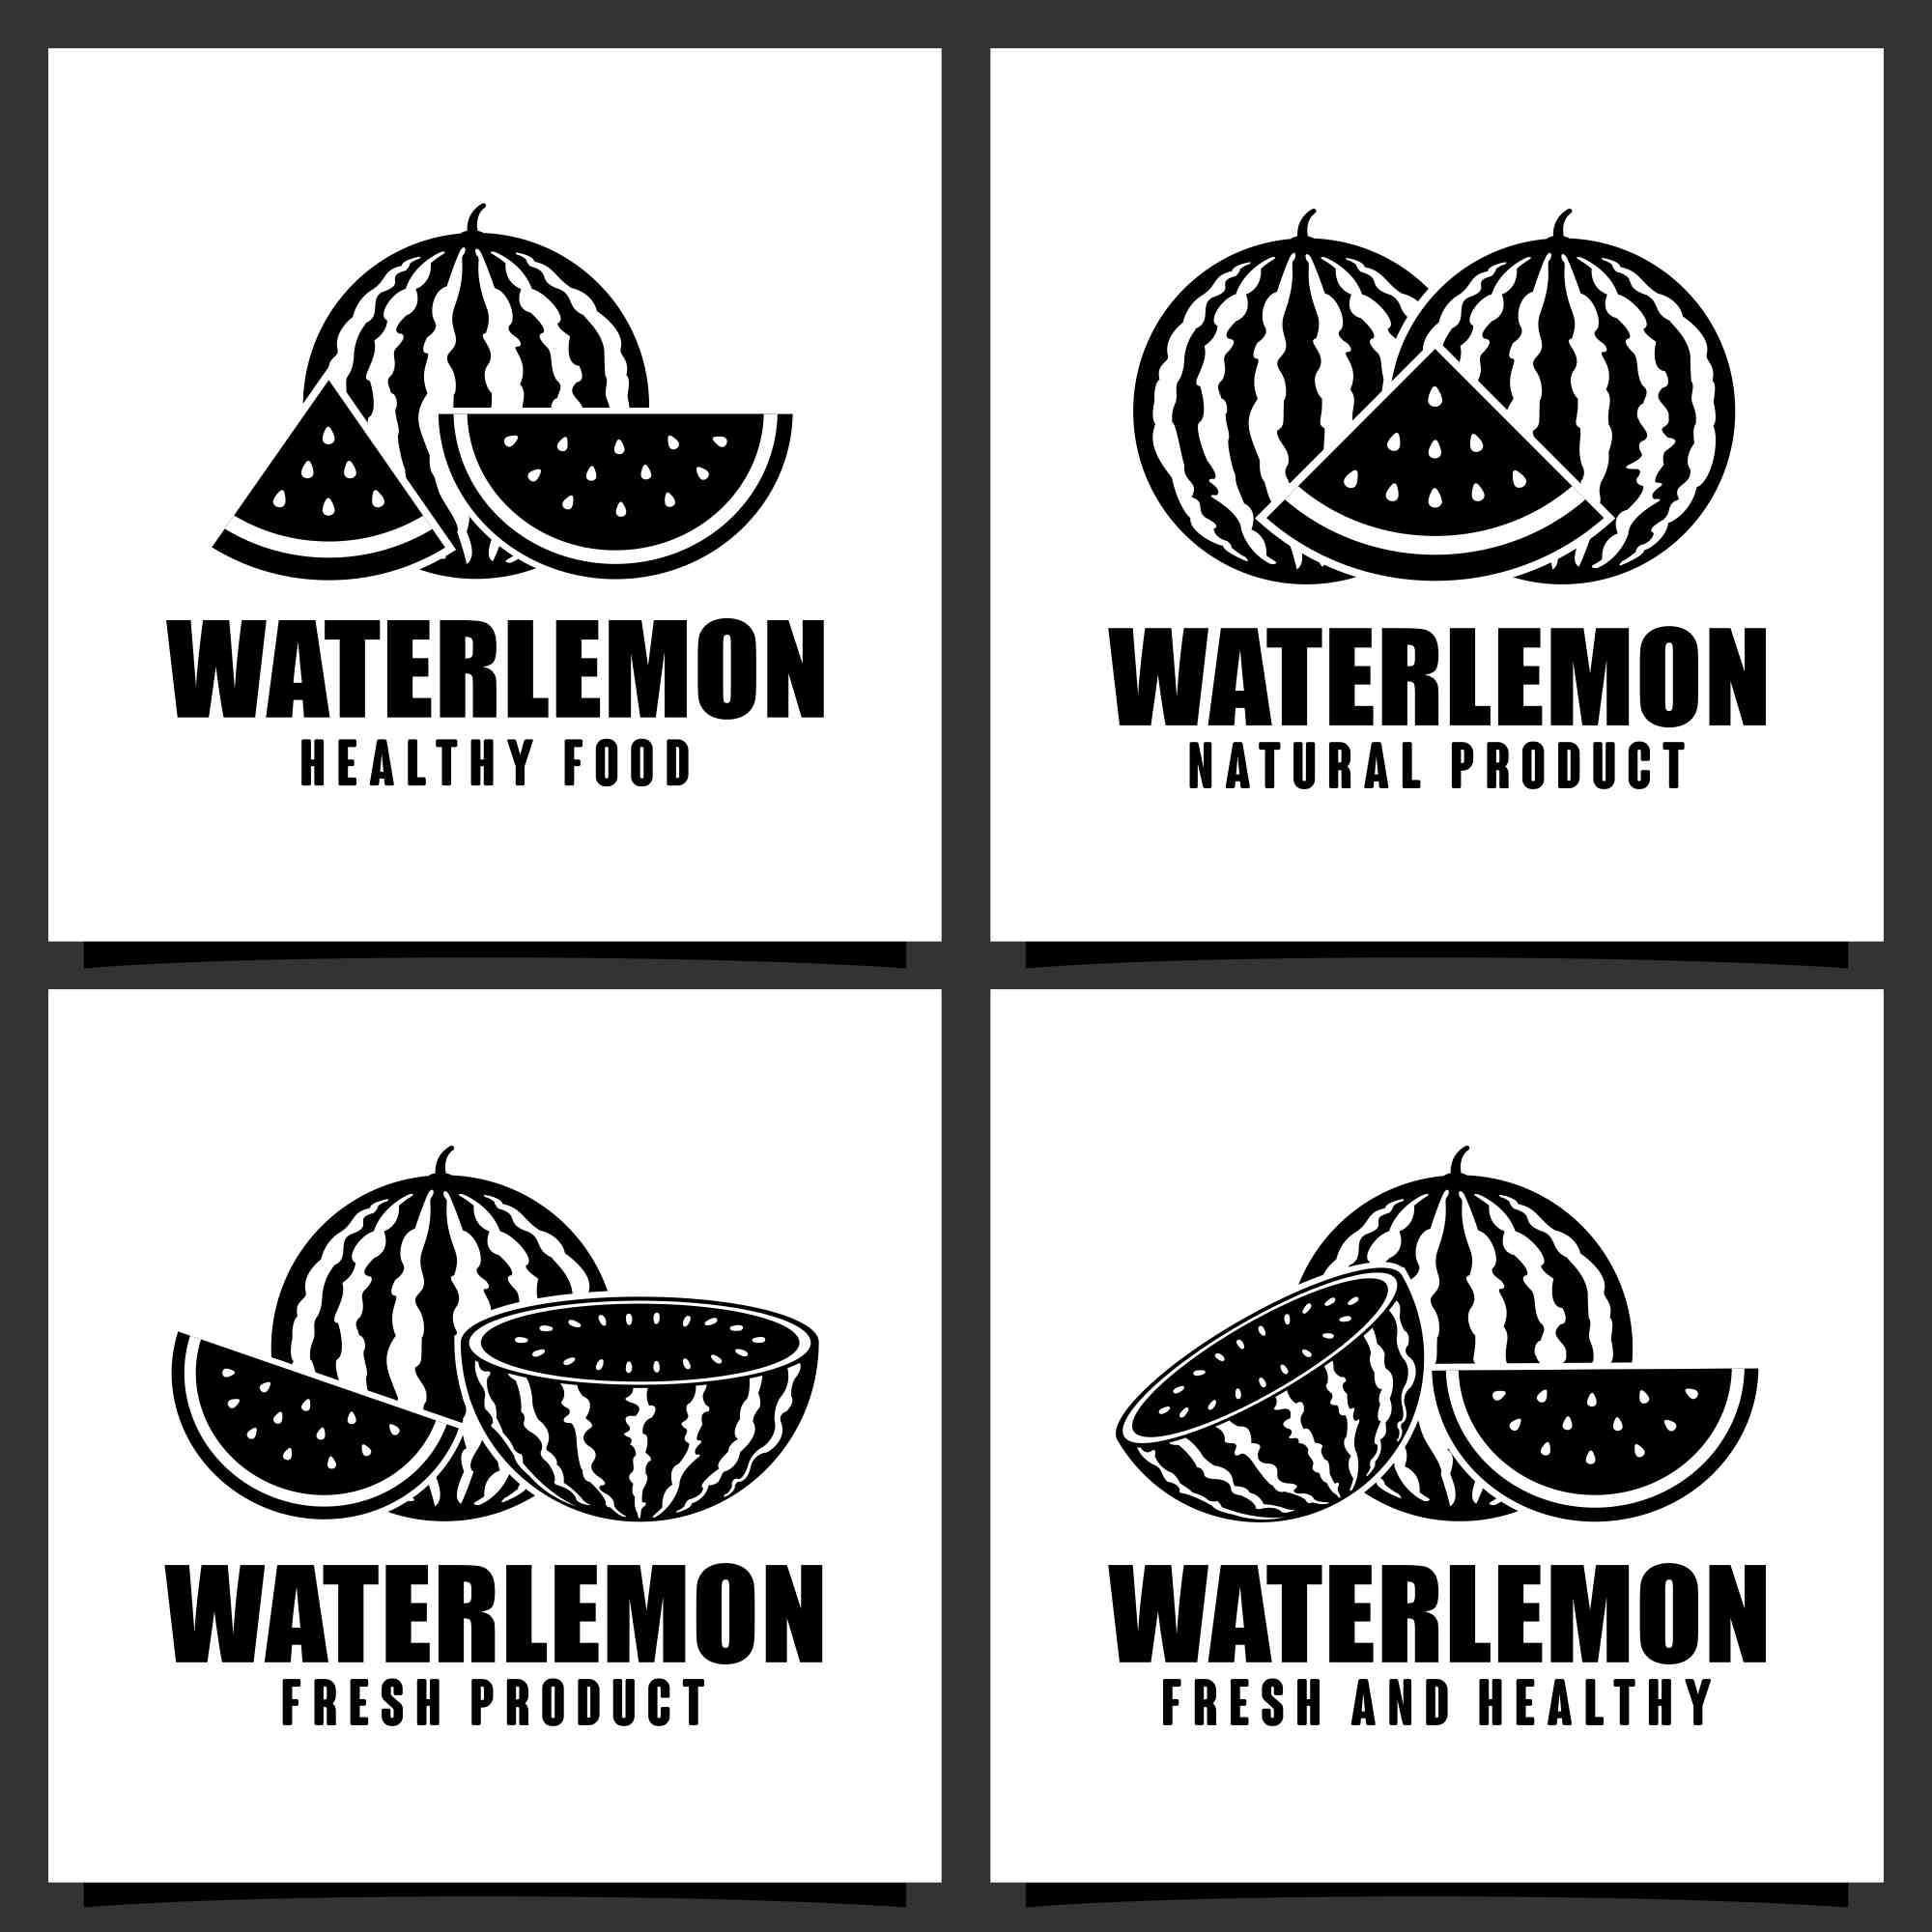 Set Watermelon vector logo design collection - $6 preview image.